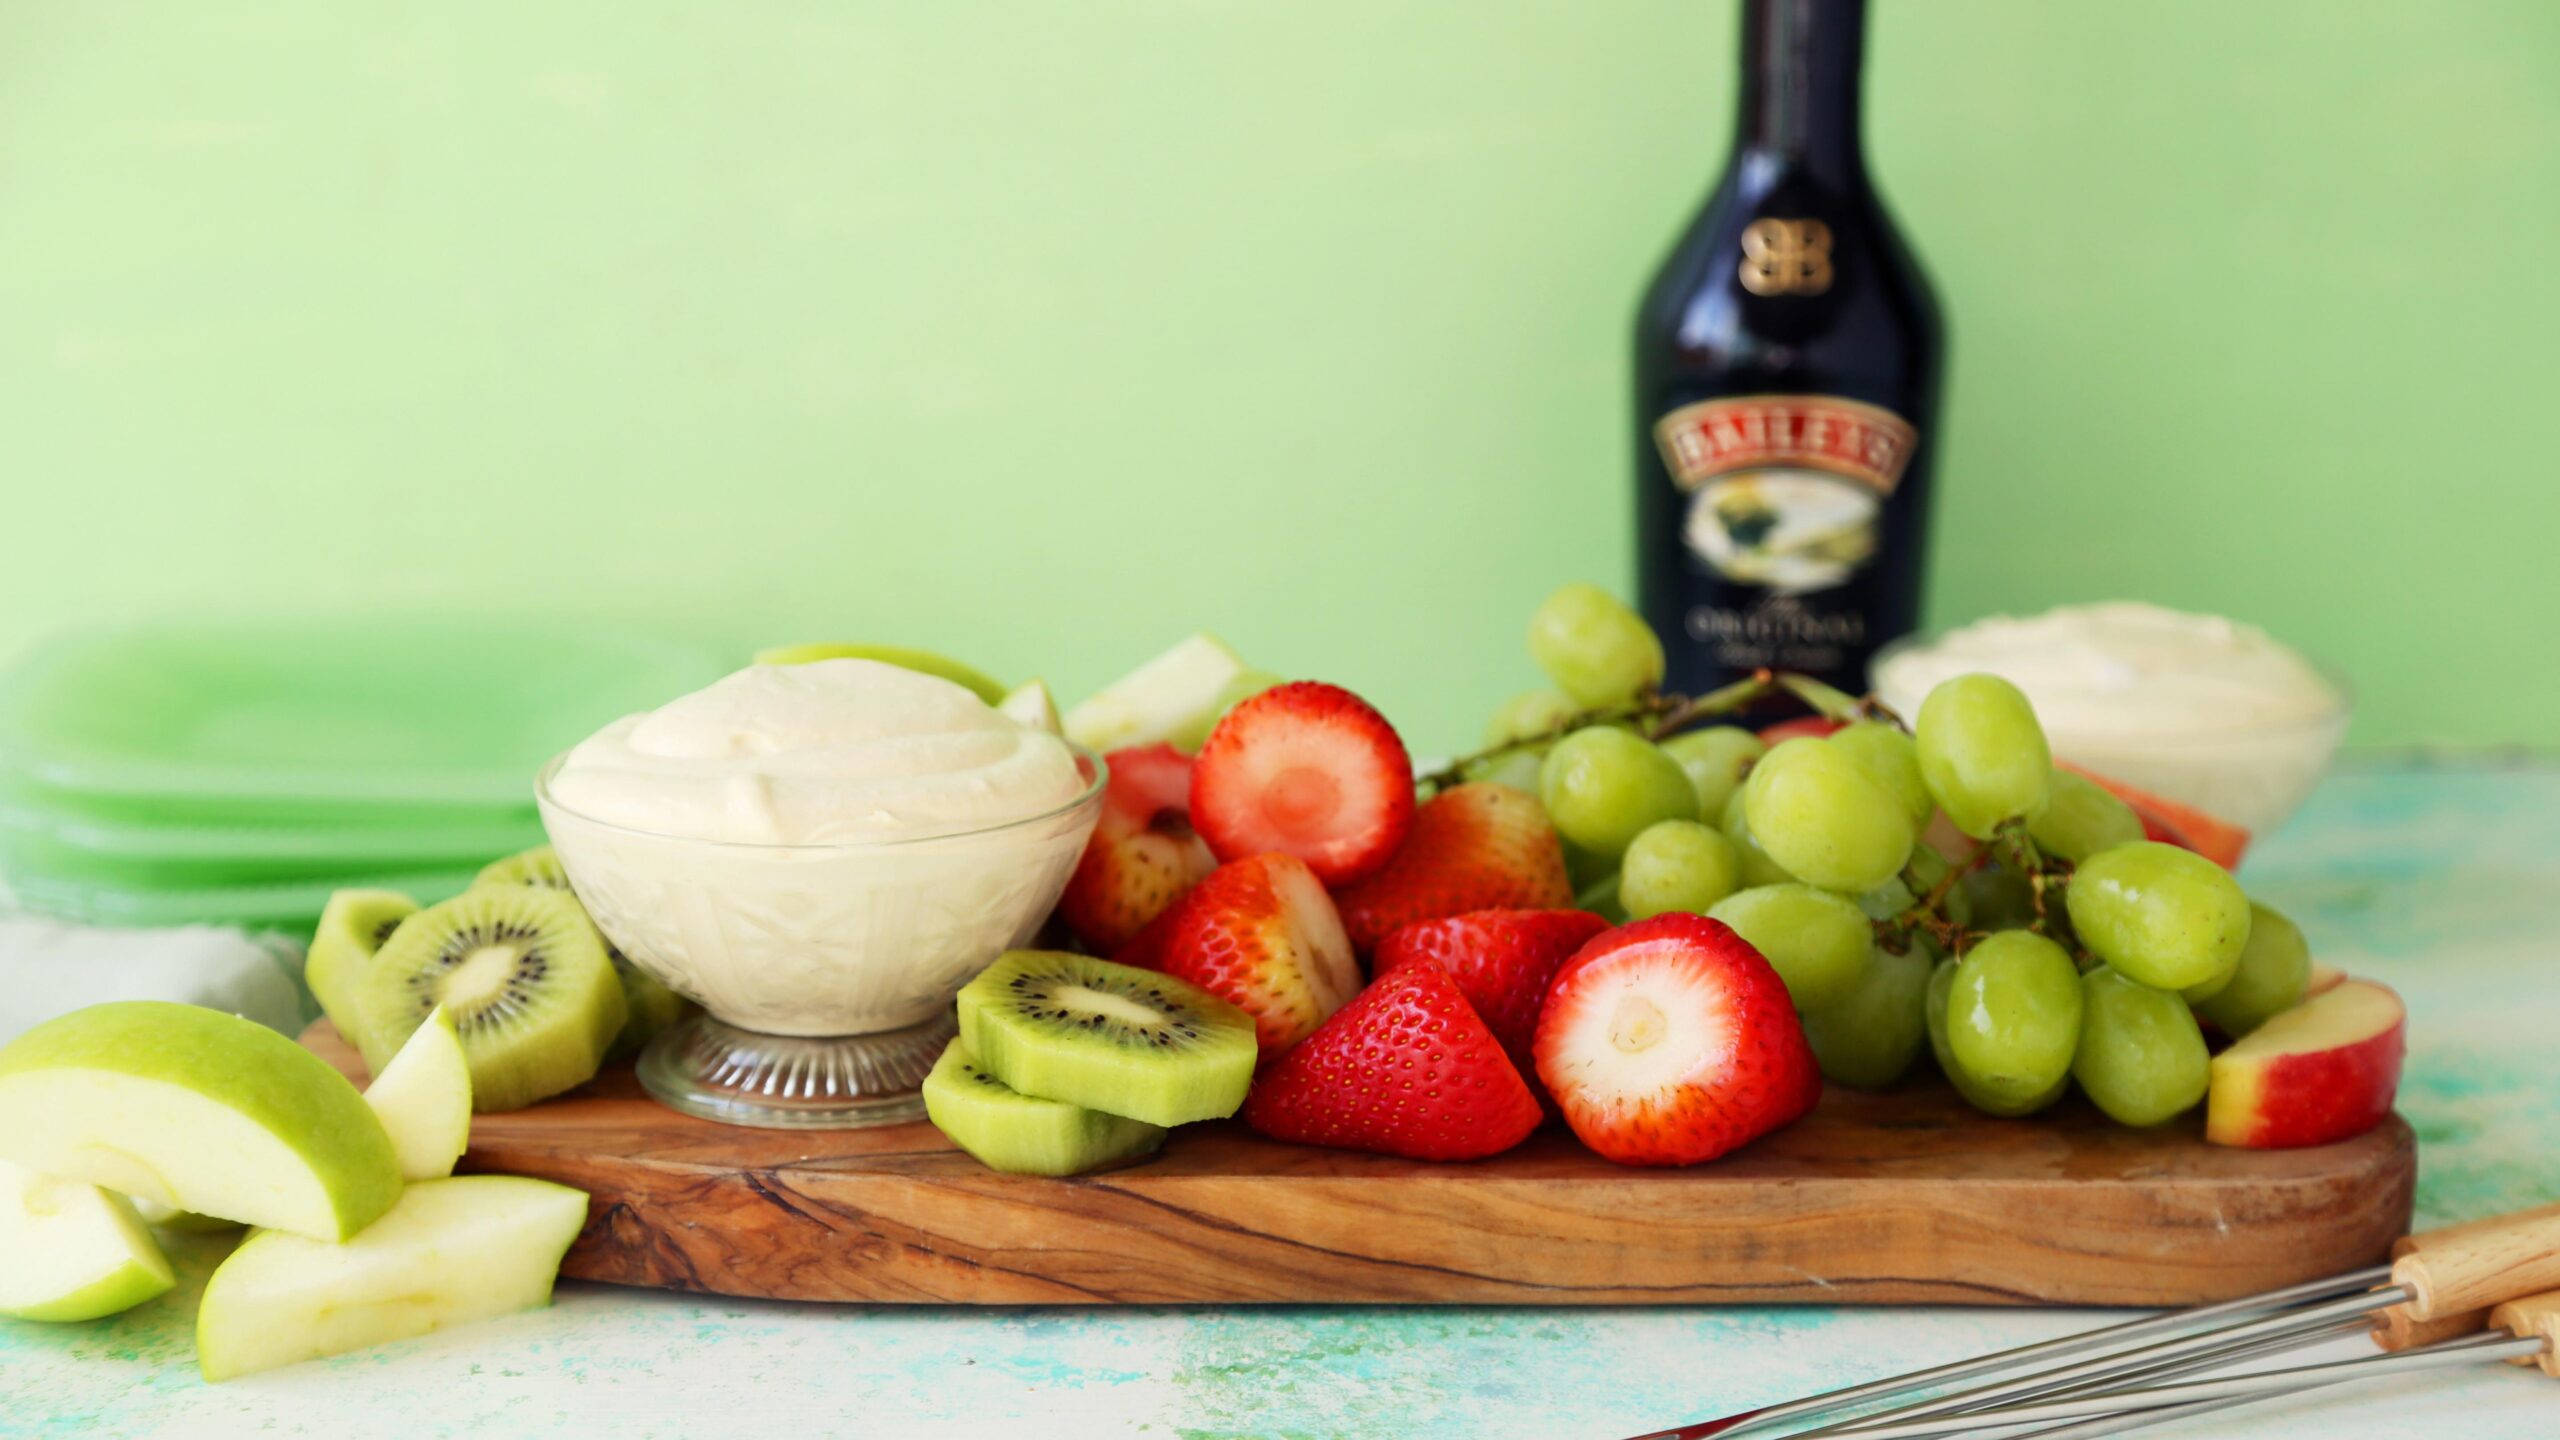  Dip into creamy bliss with this Bailey's Irish Cream Fruit Dip!